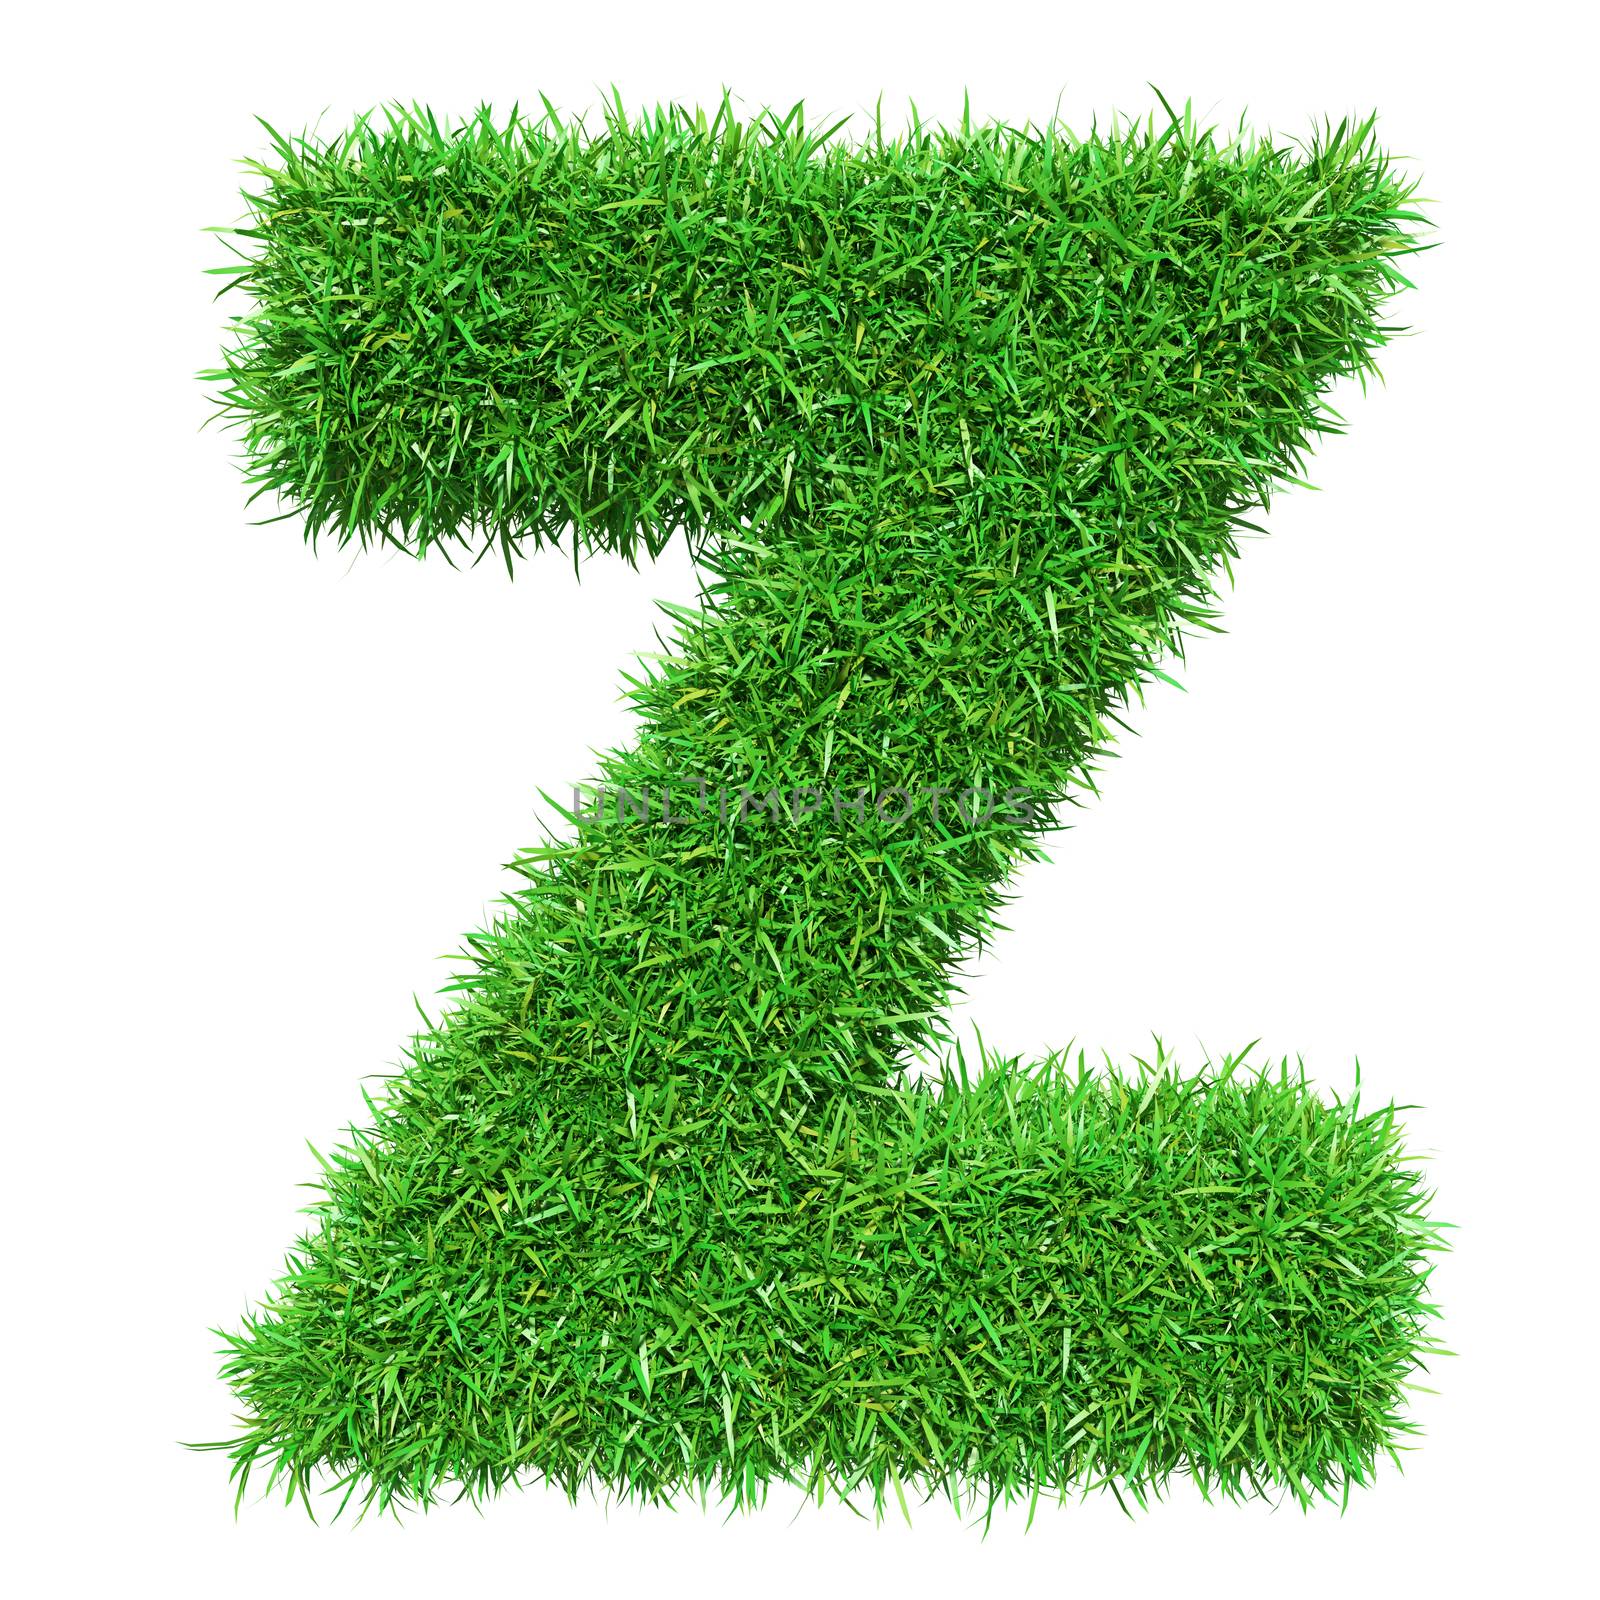 Green Grass Letter Z by cherezoff